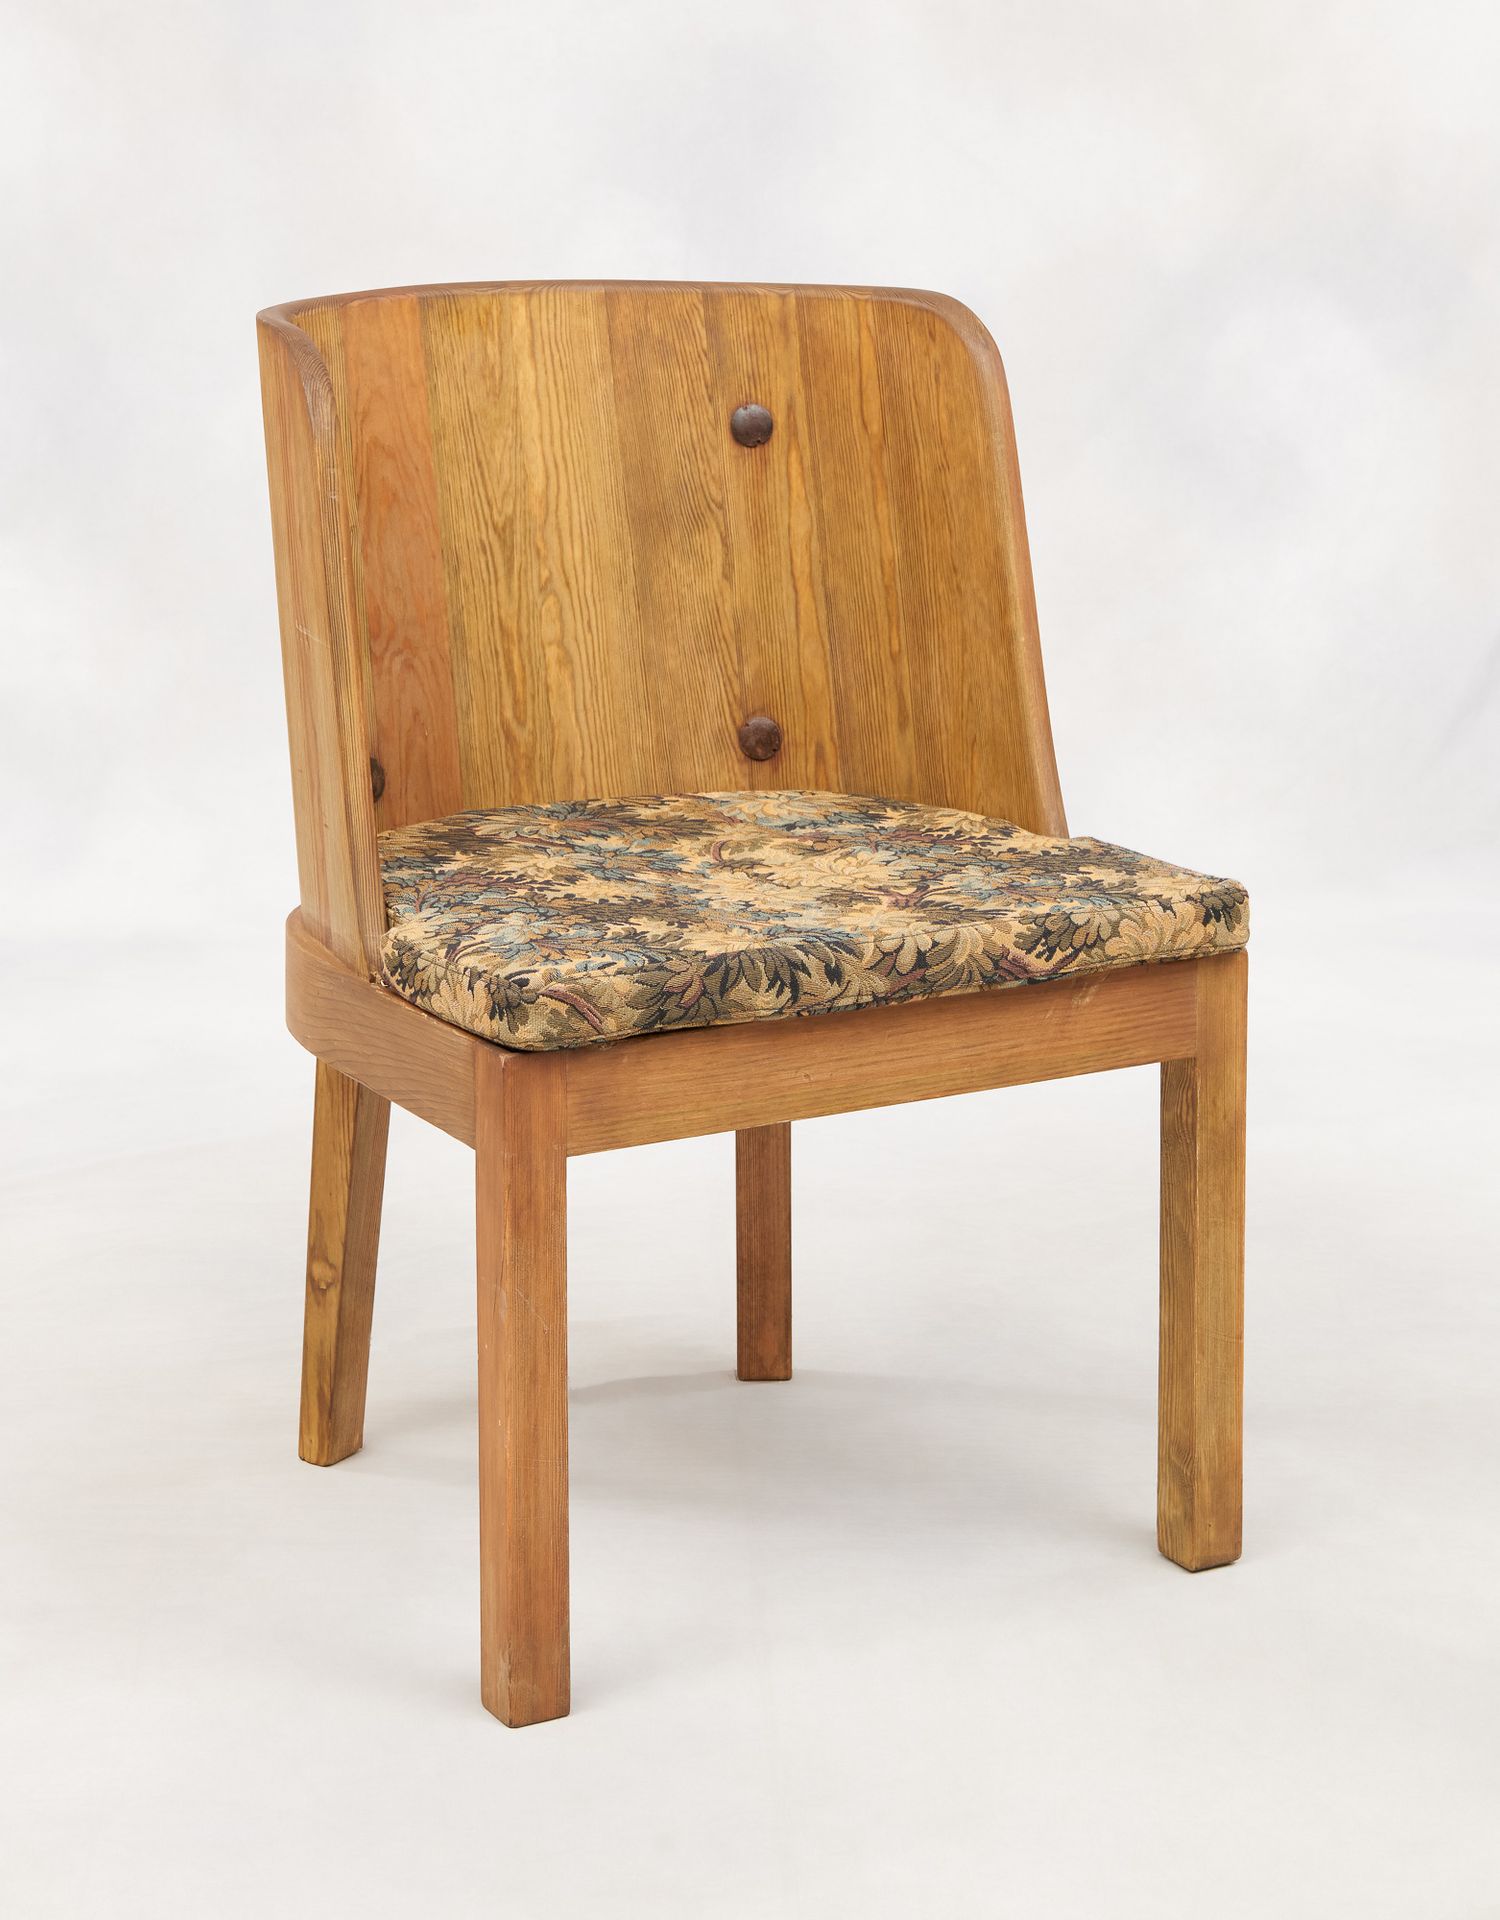 Design. 家具：一对实心松木扶手椅，有可拆卸的坐垫。

在阿克塞尔-埃纳尔-希约特的品味中。